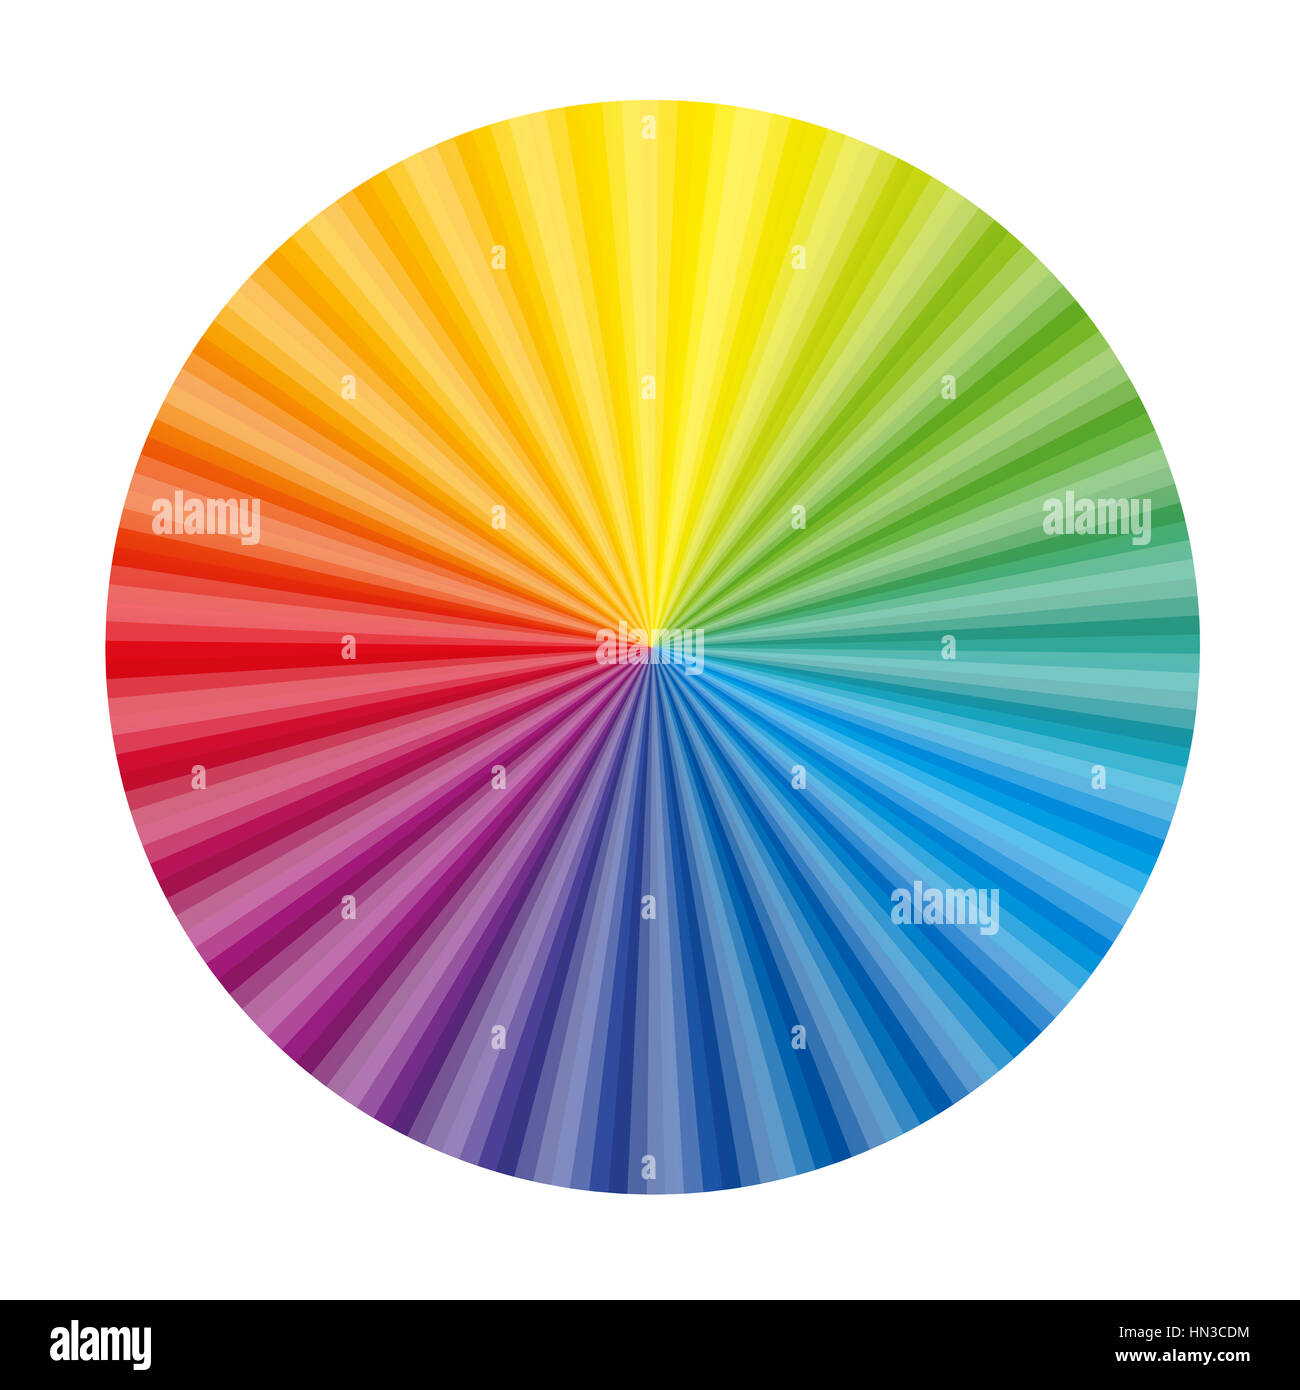 Degradado de color circular Fan Chart Foto de stock